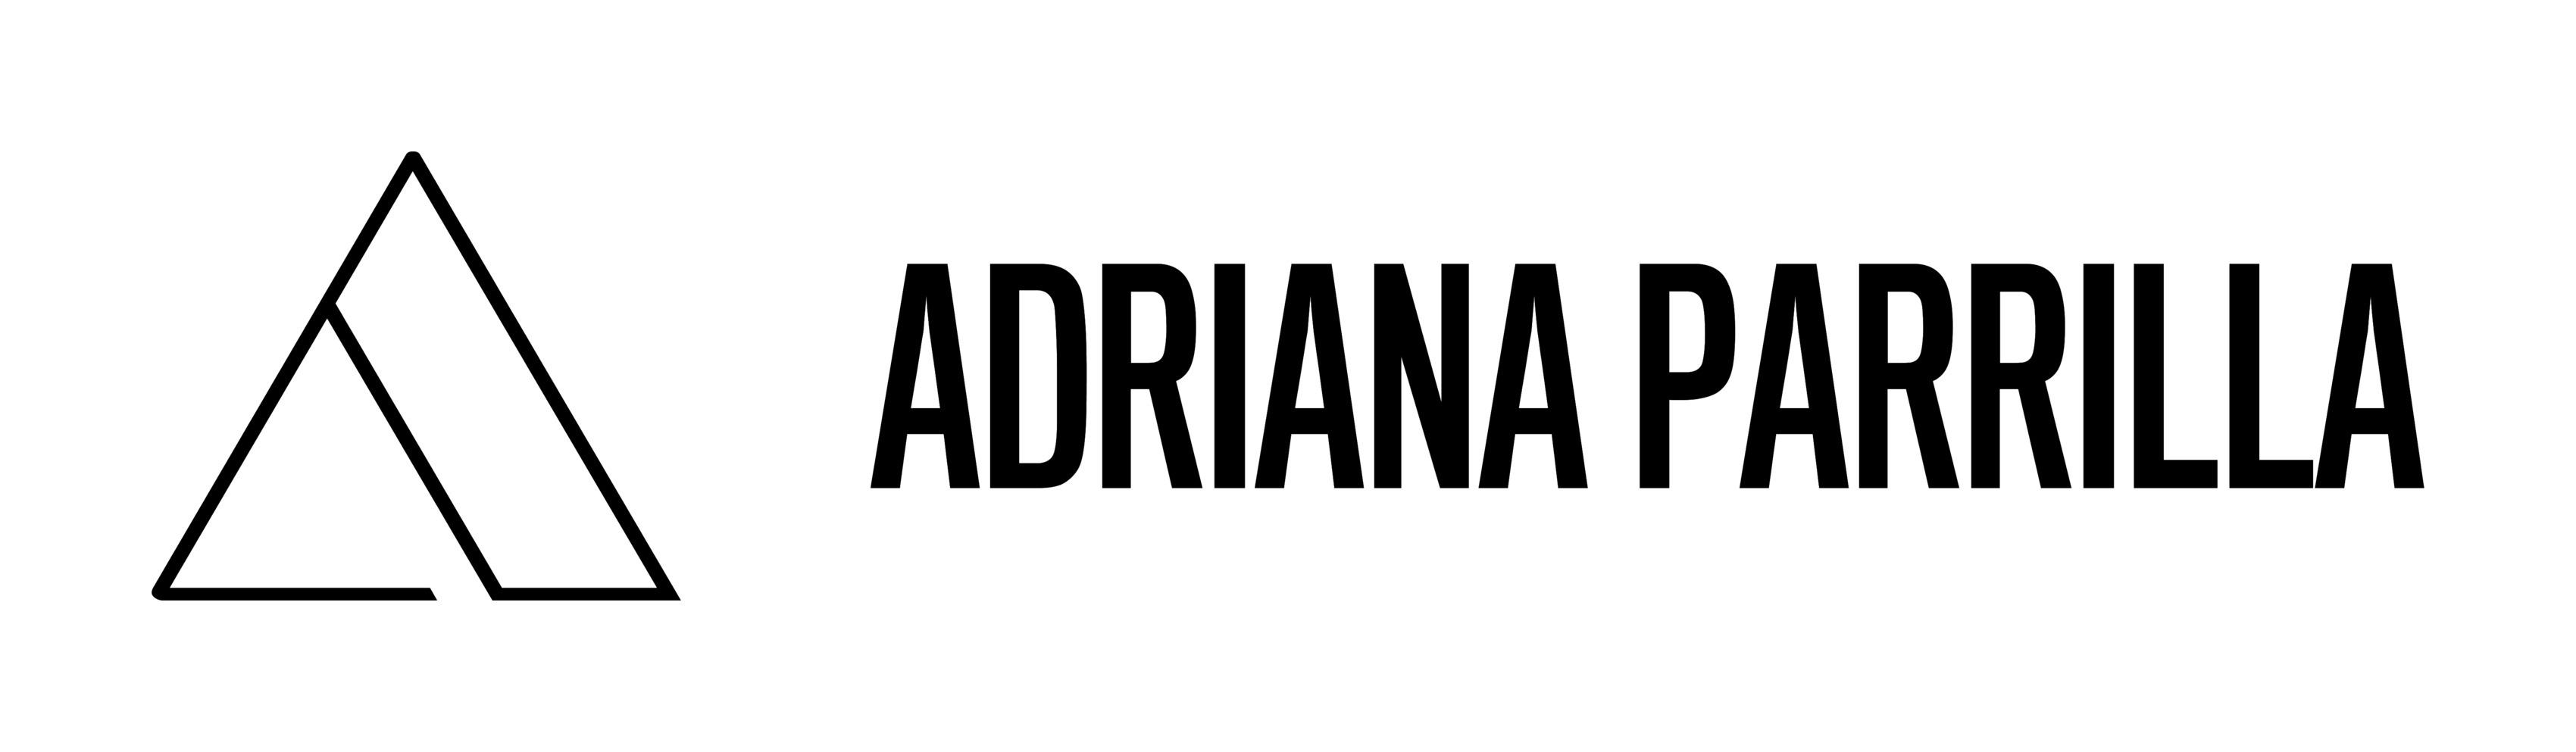 Adriana Parrilla | Community